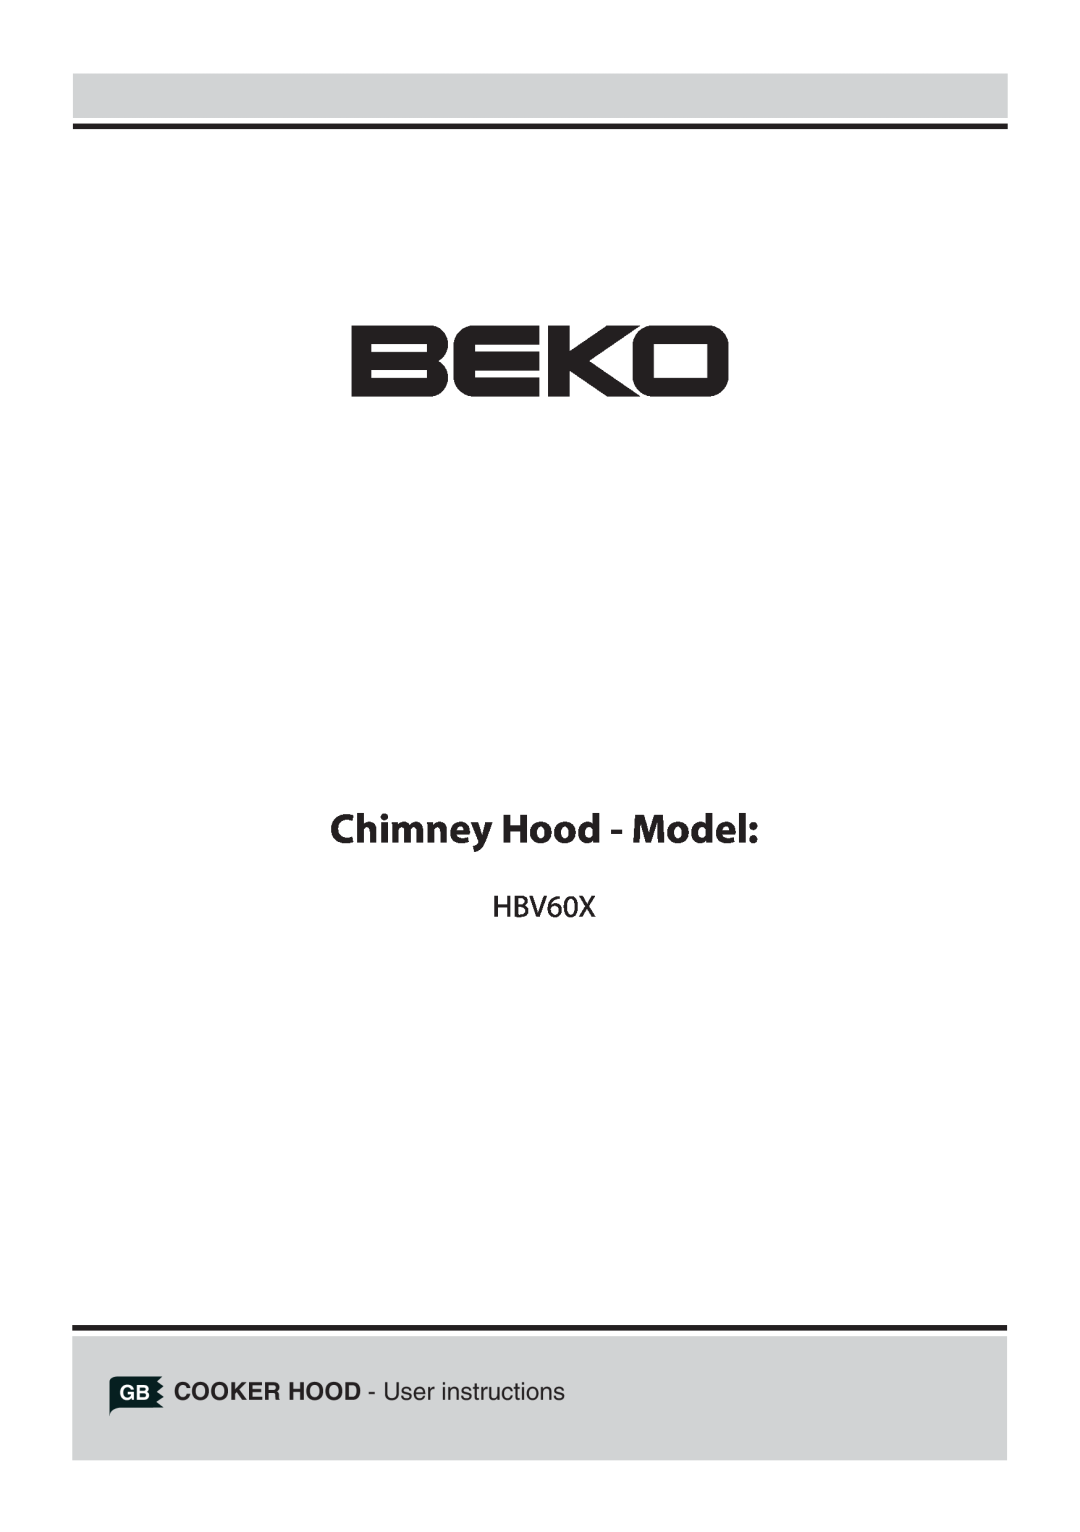 Beko HBV60X manual Chmney Hood - Model, GB COOKER HOOD - User instructions 